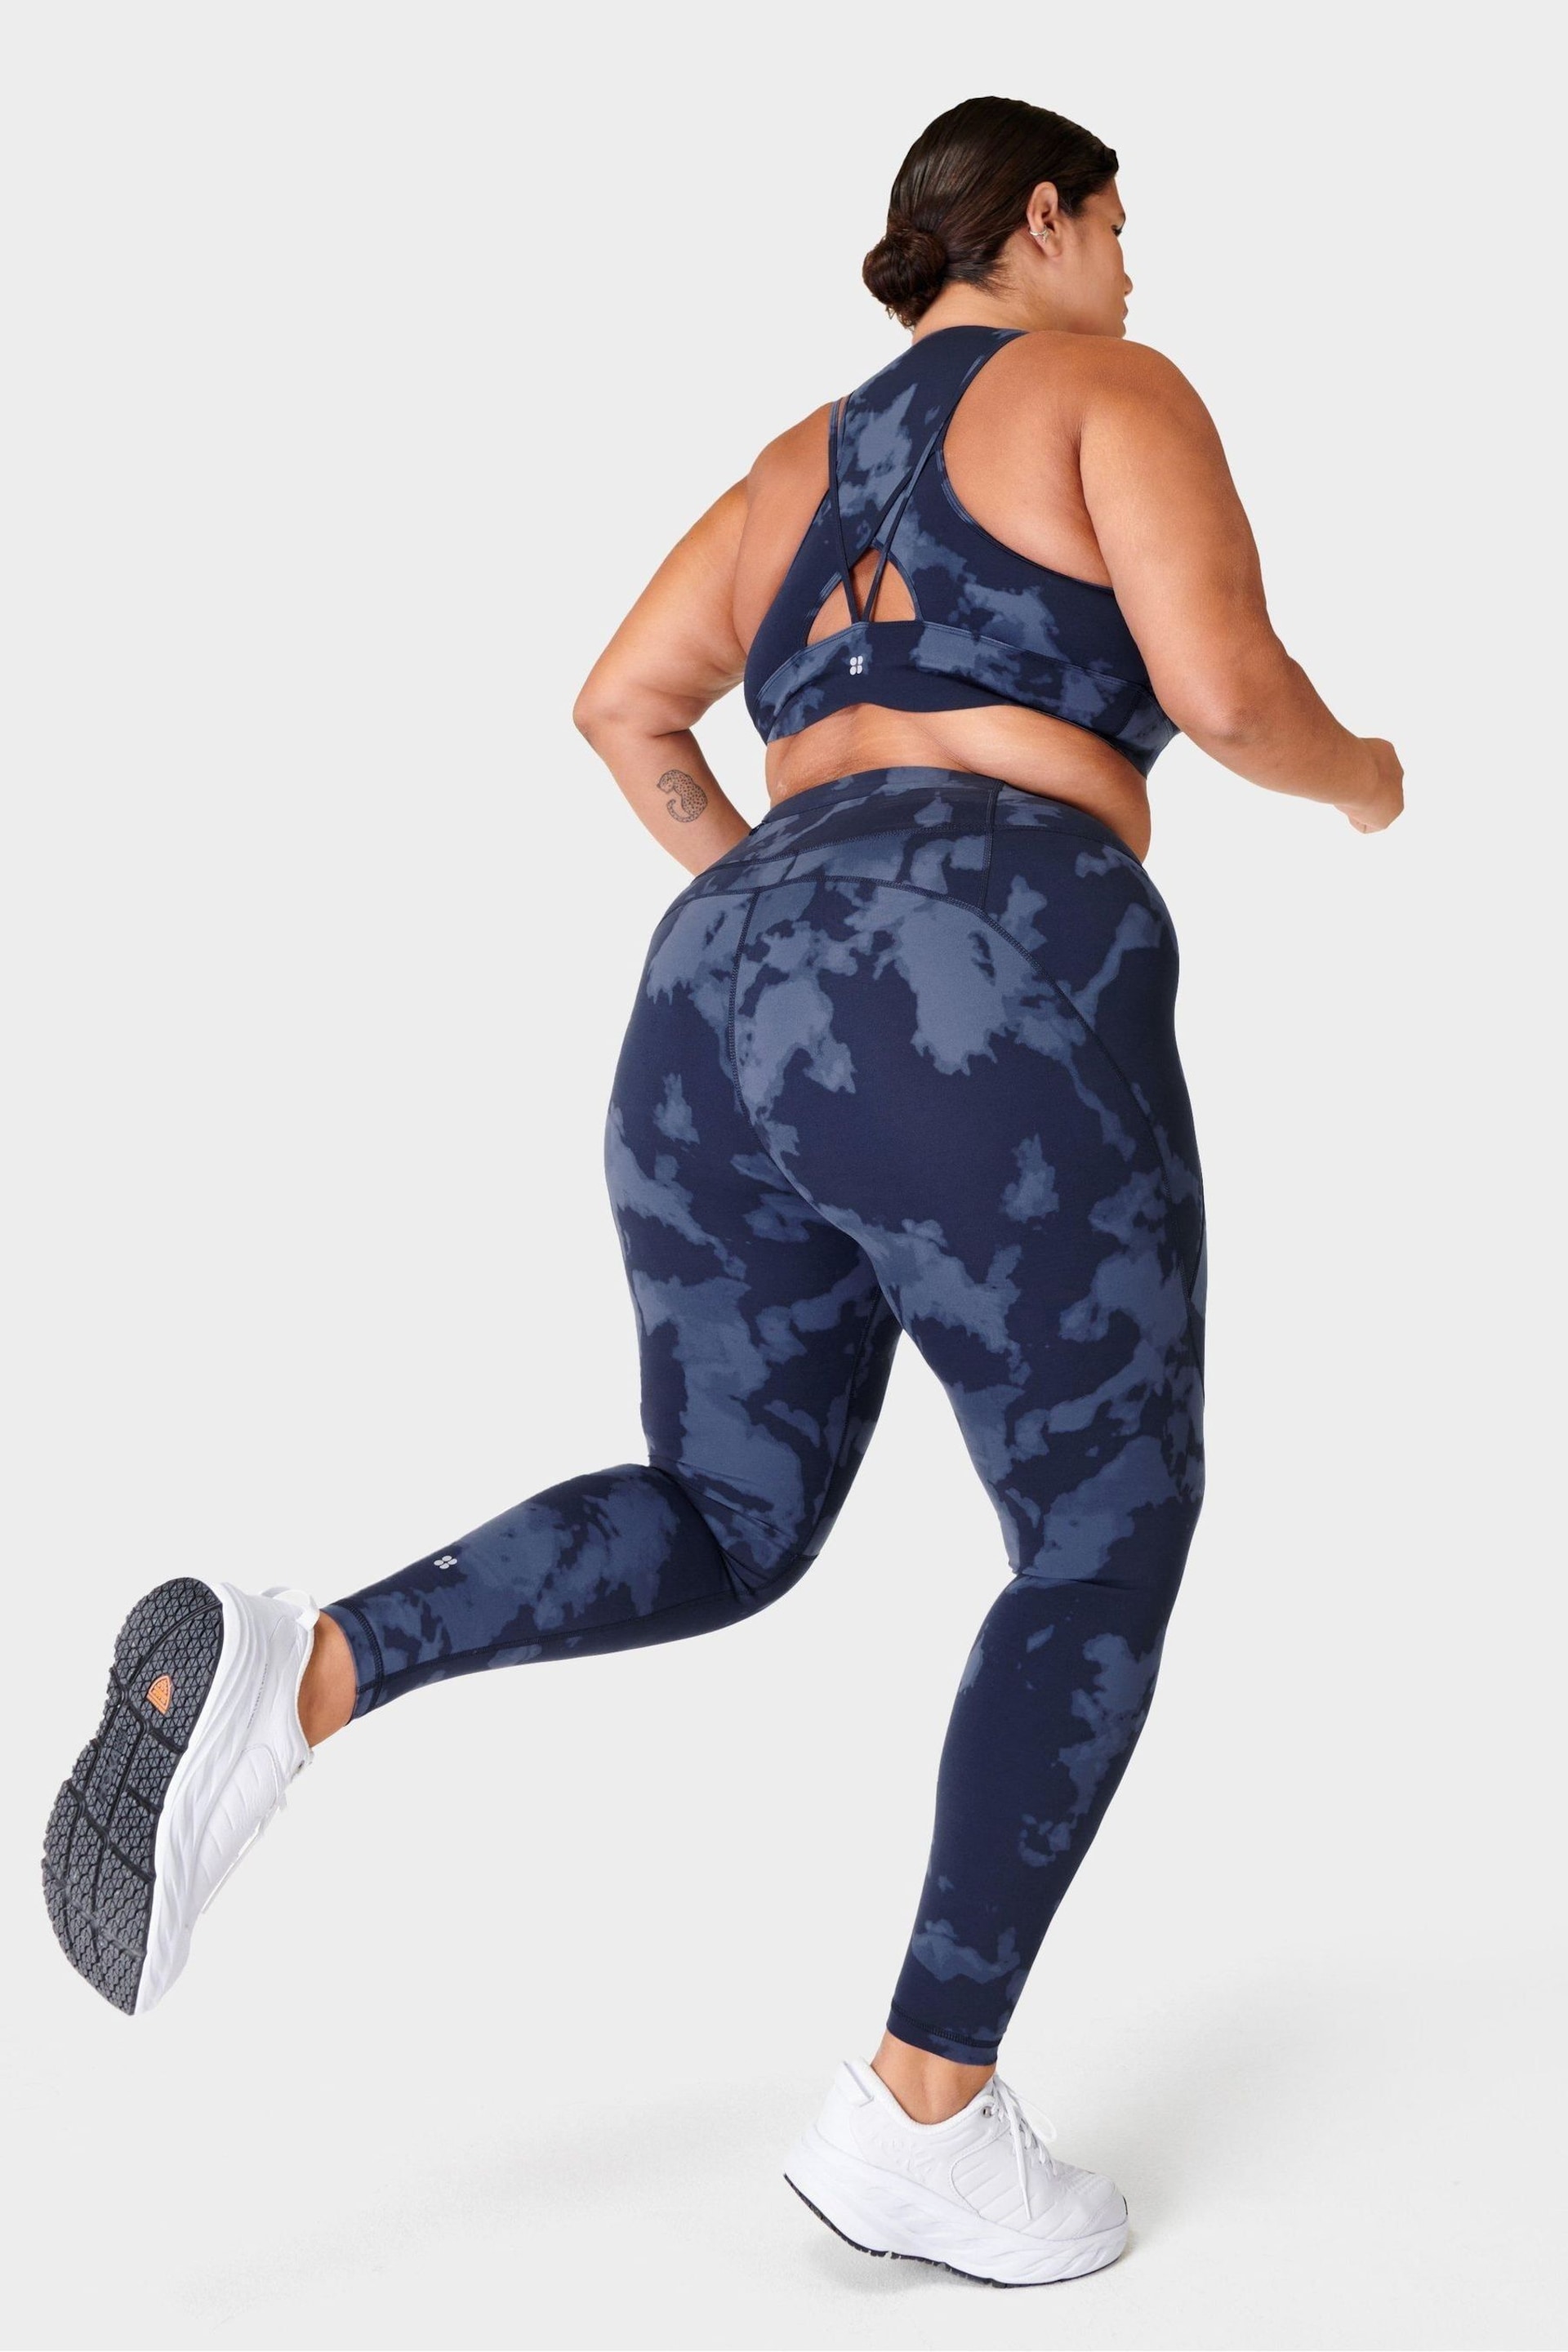 Sweaty Betty Blue Fade Print Full Length Power Workout Leggings - Image 4 of 8